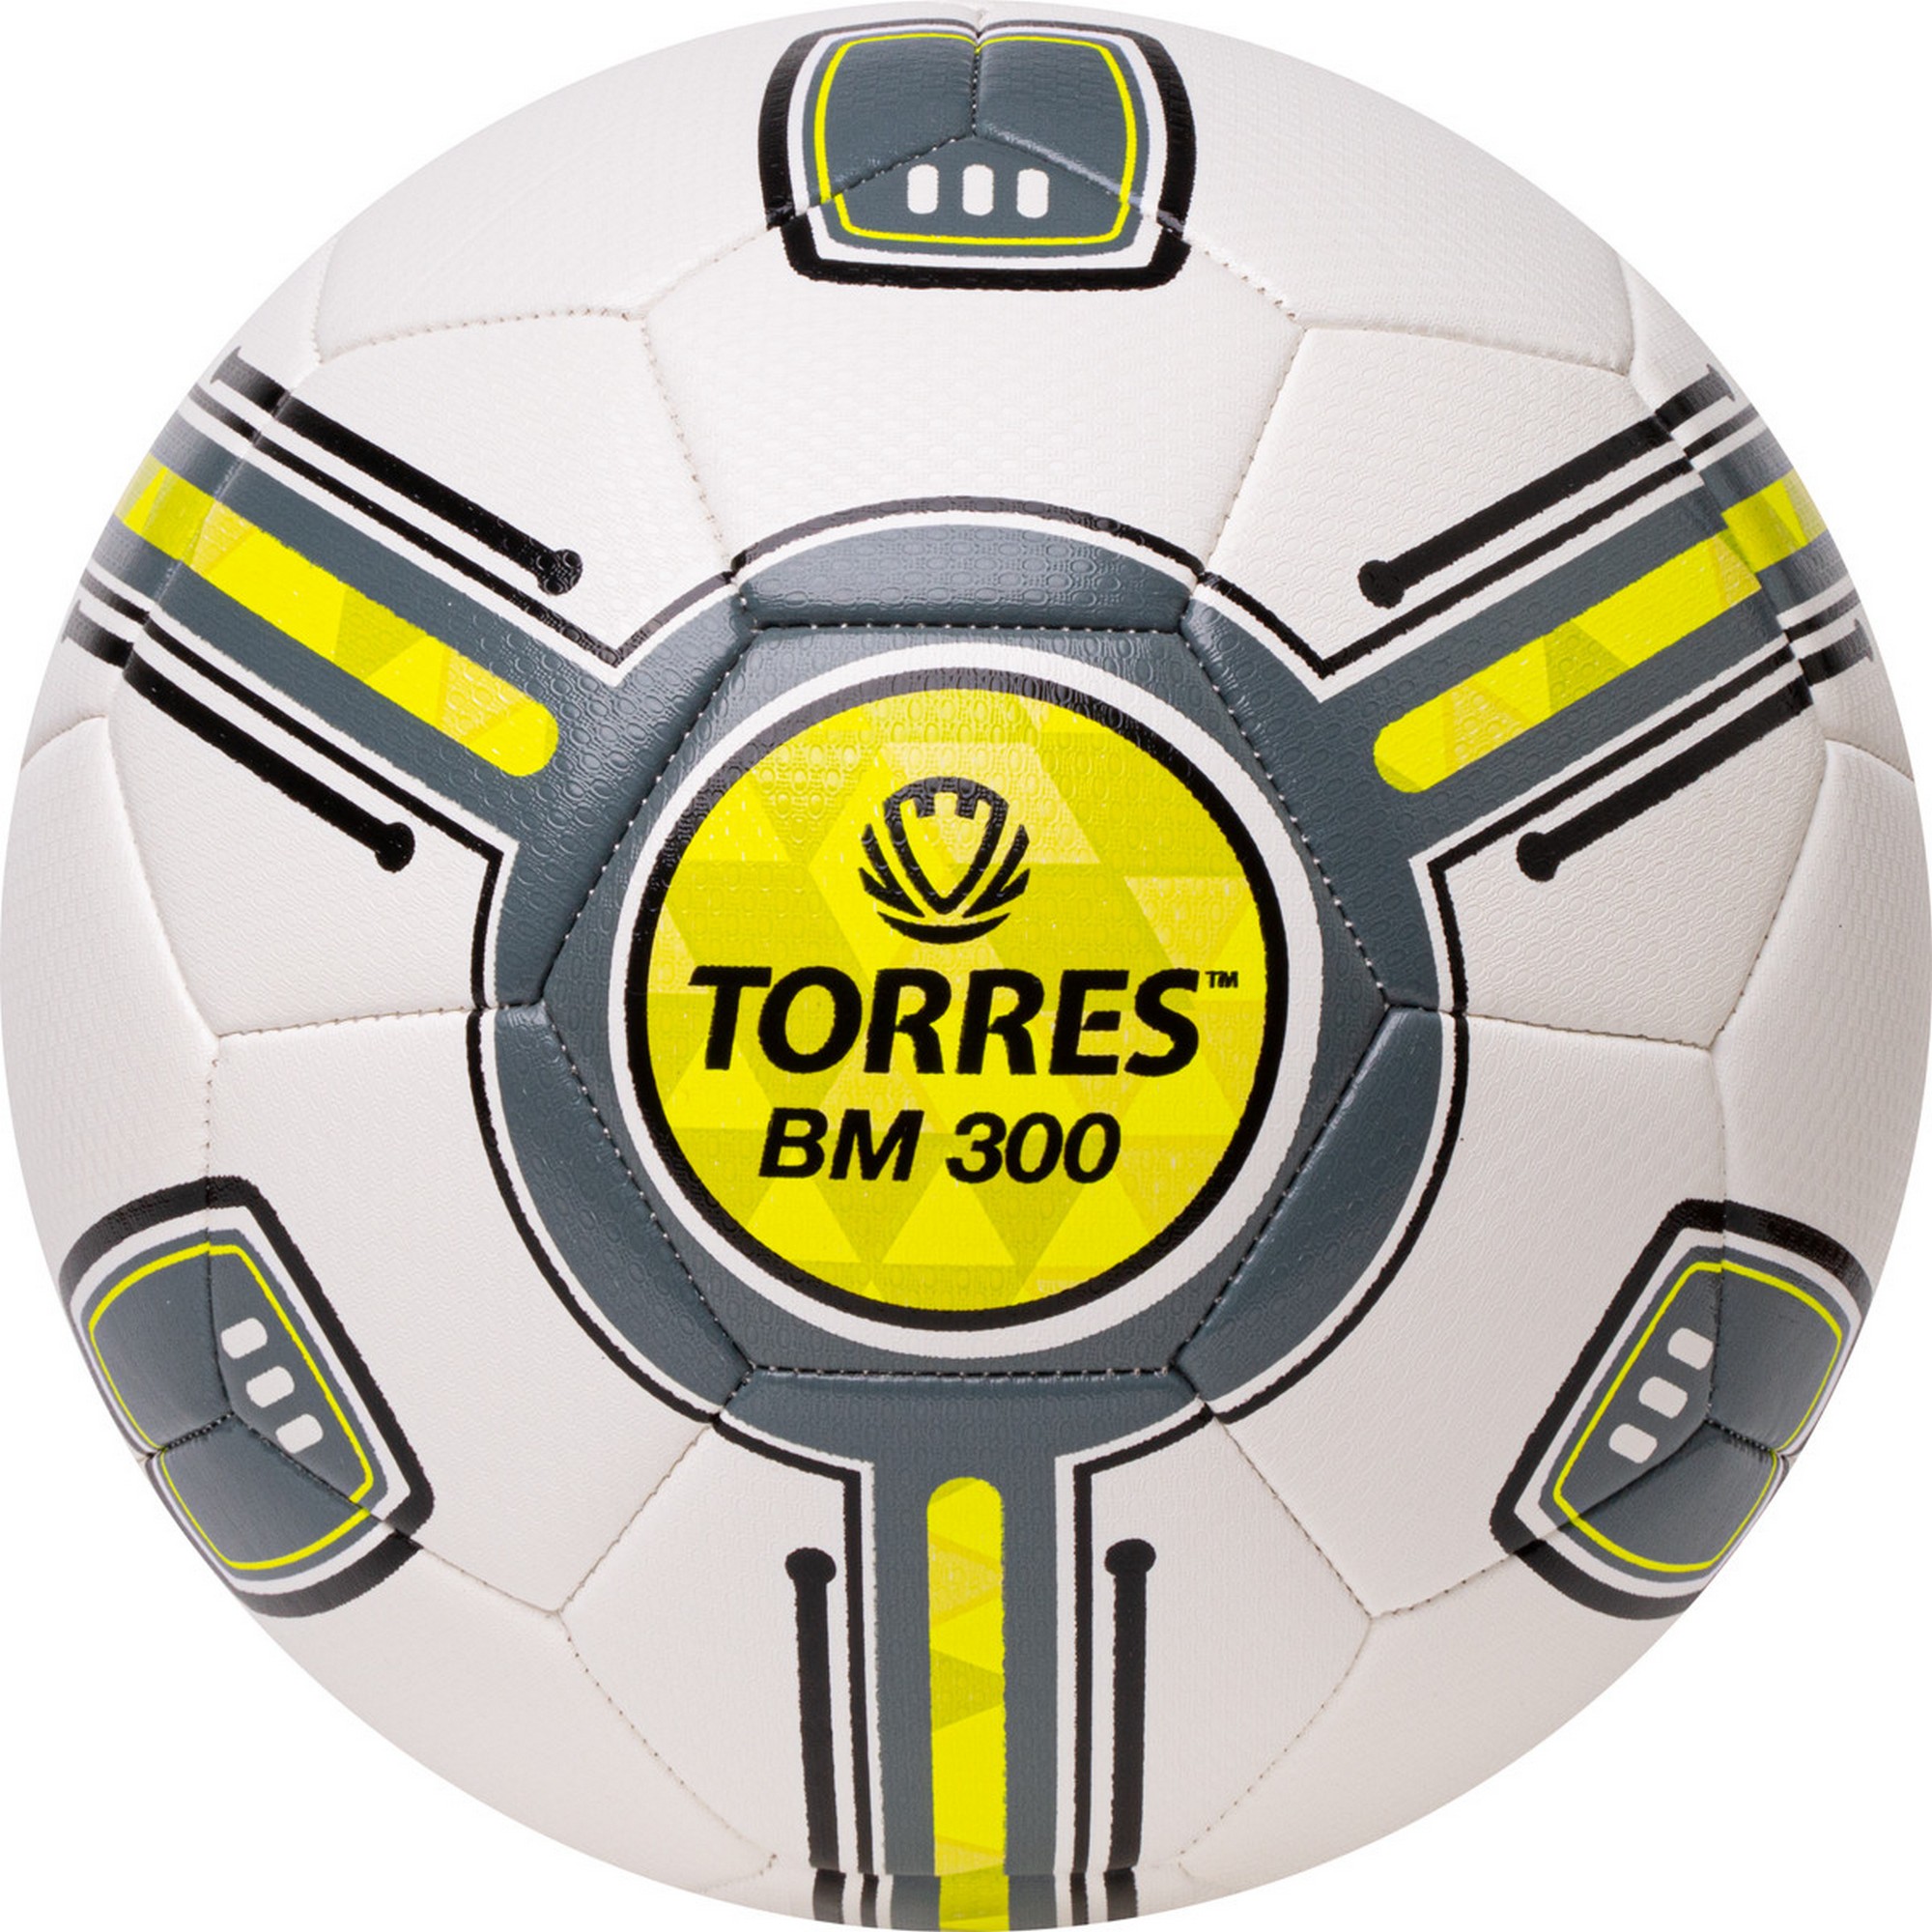   Torres BM 300 F323655 .5